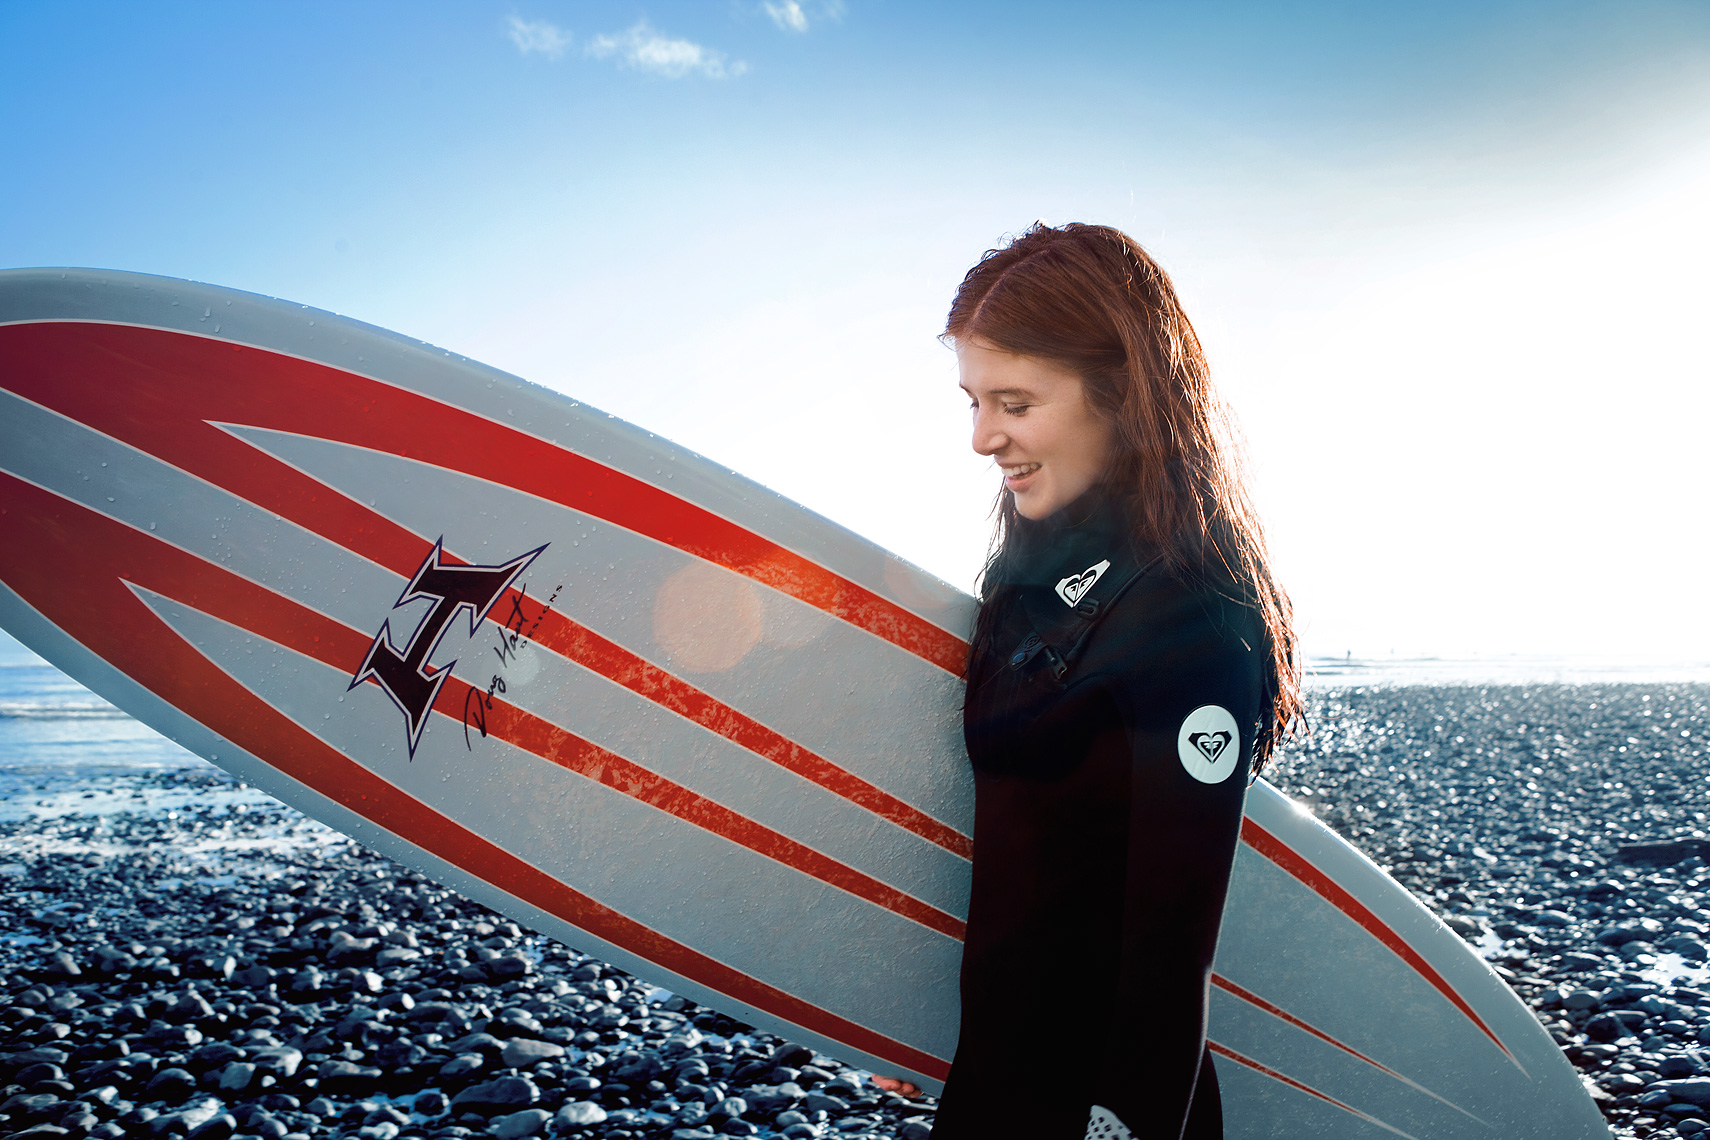 scott-stewart-lifestyle-portrait-of-surfer-with-surfboard-ann-arbor-editorial-photographer